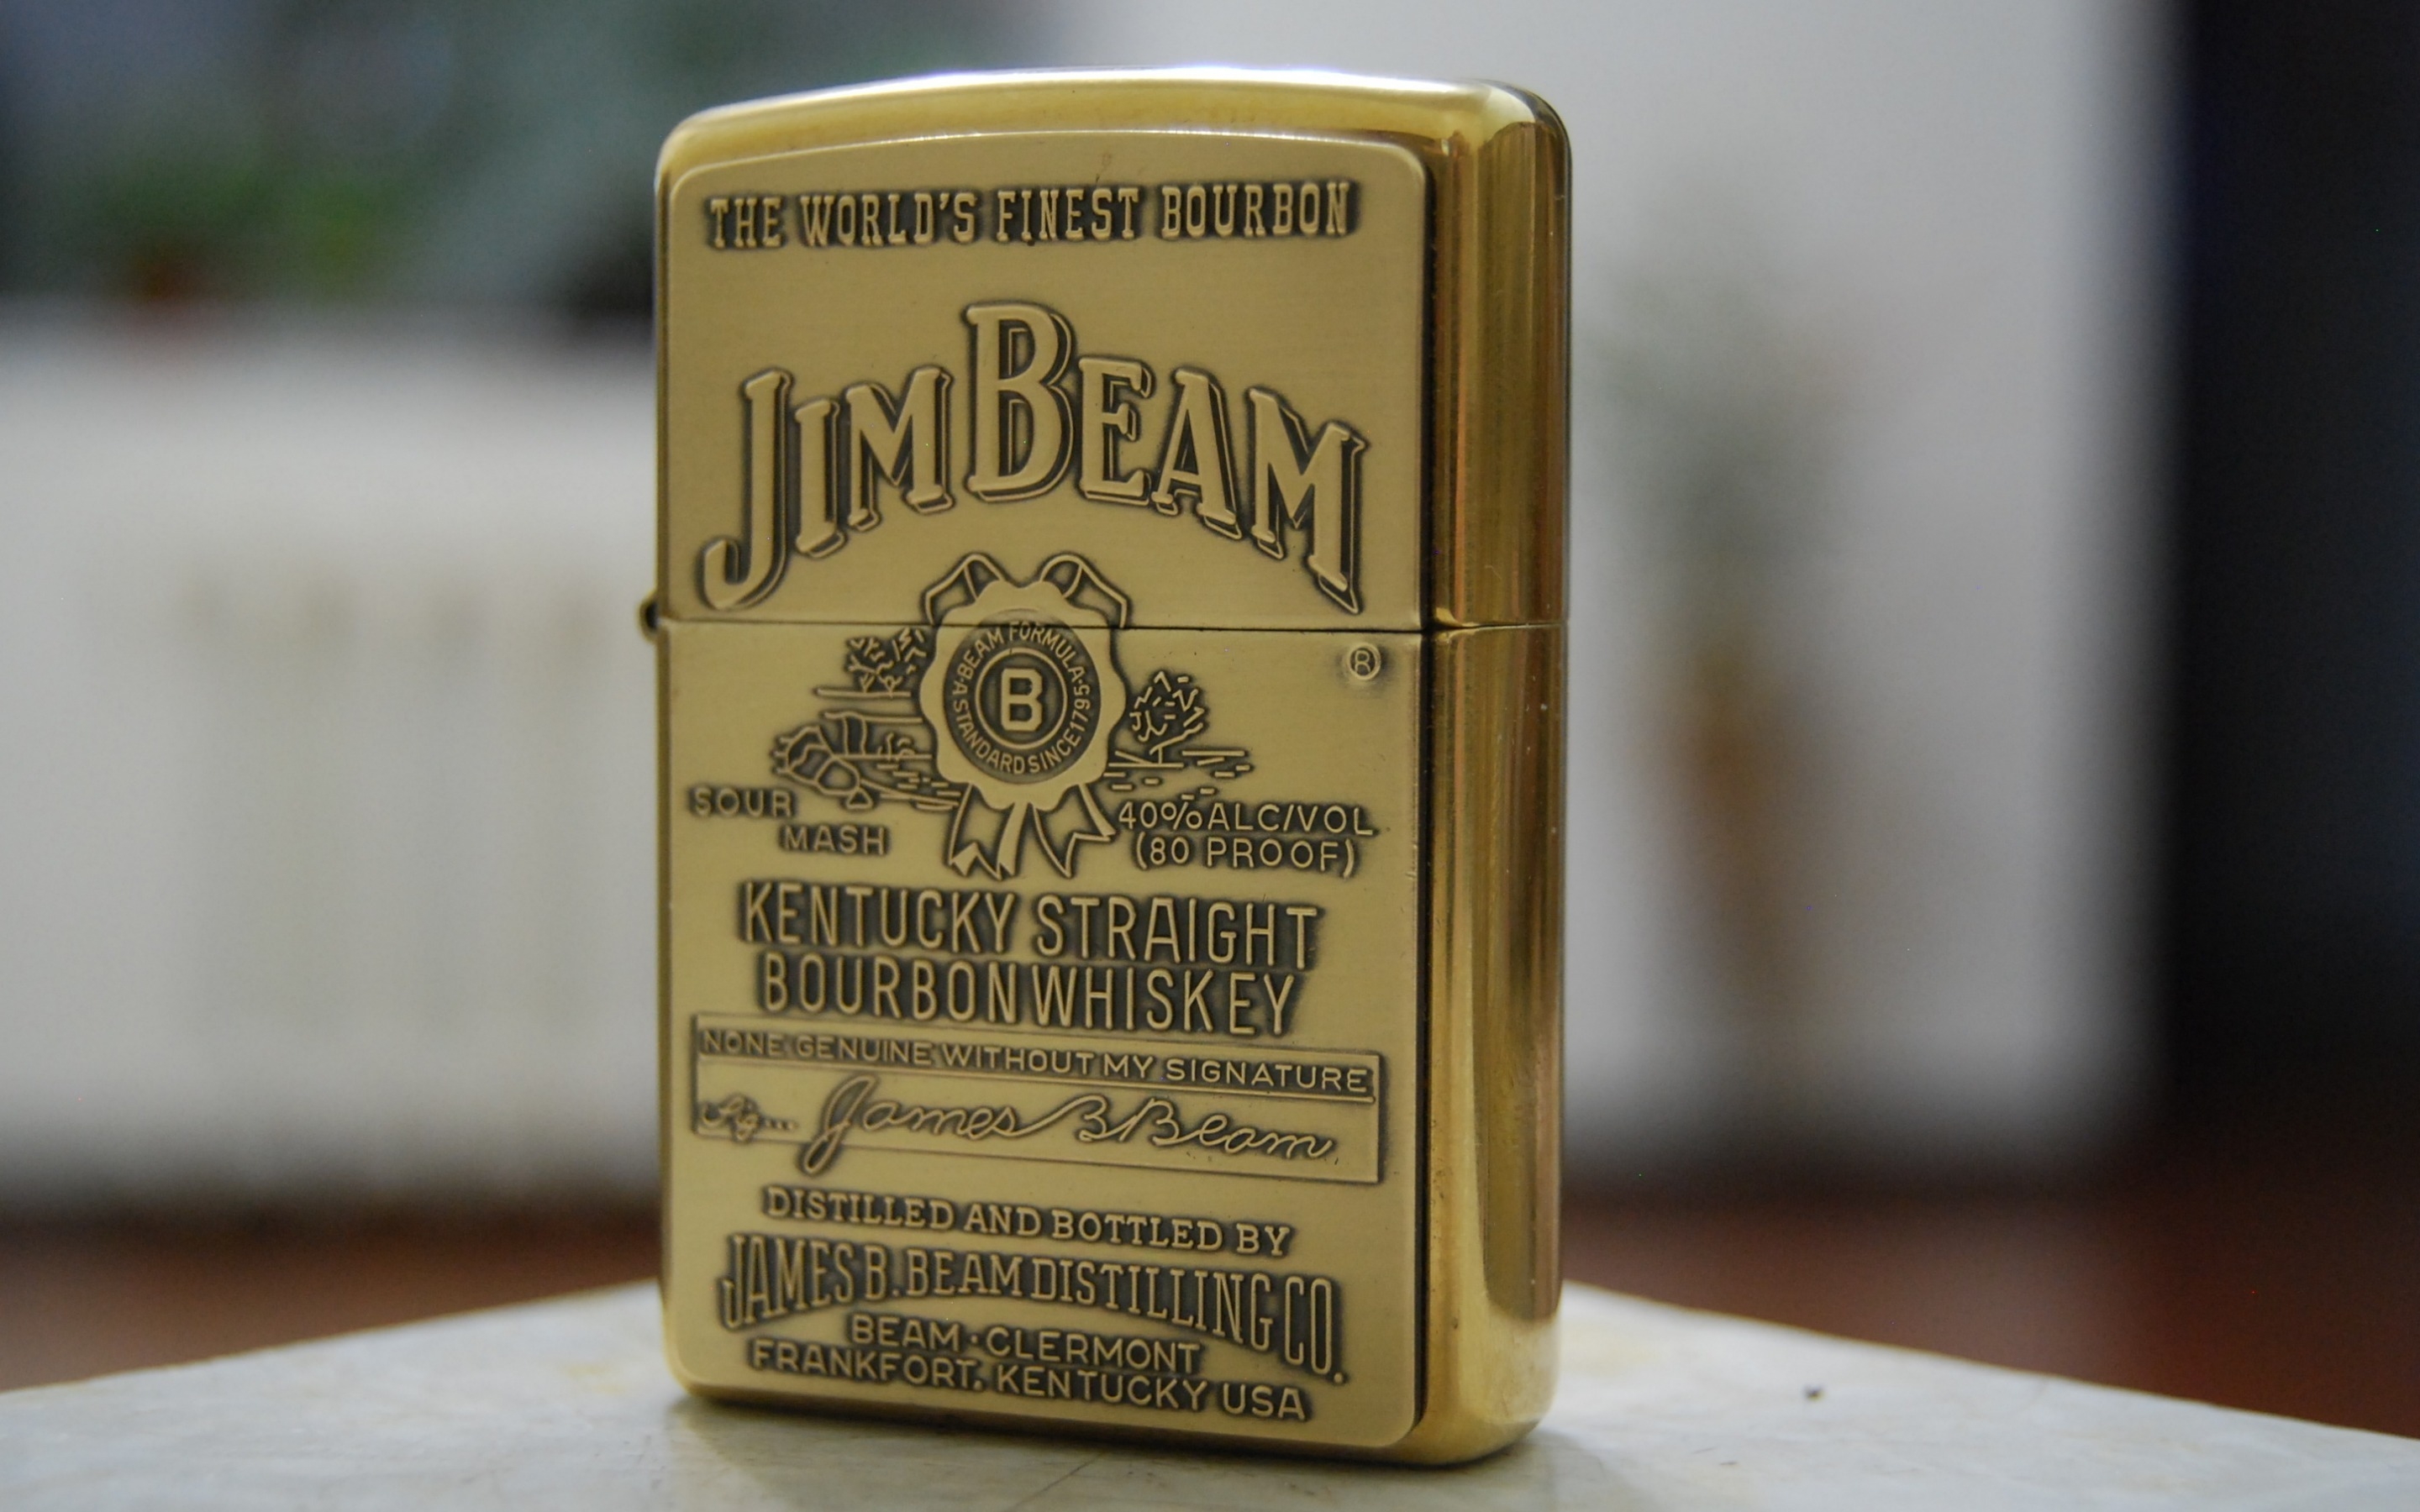 Jim Beam Zippo Lighter for 2880 x 1800 Retina Display resolution